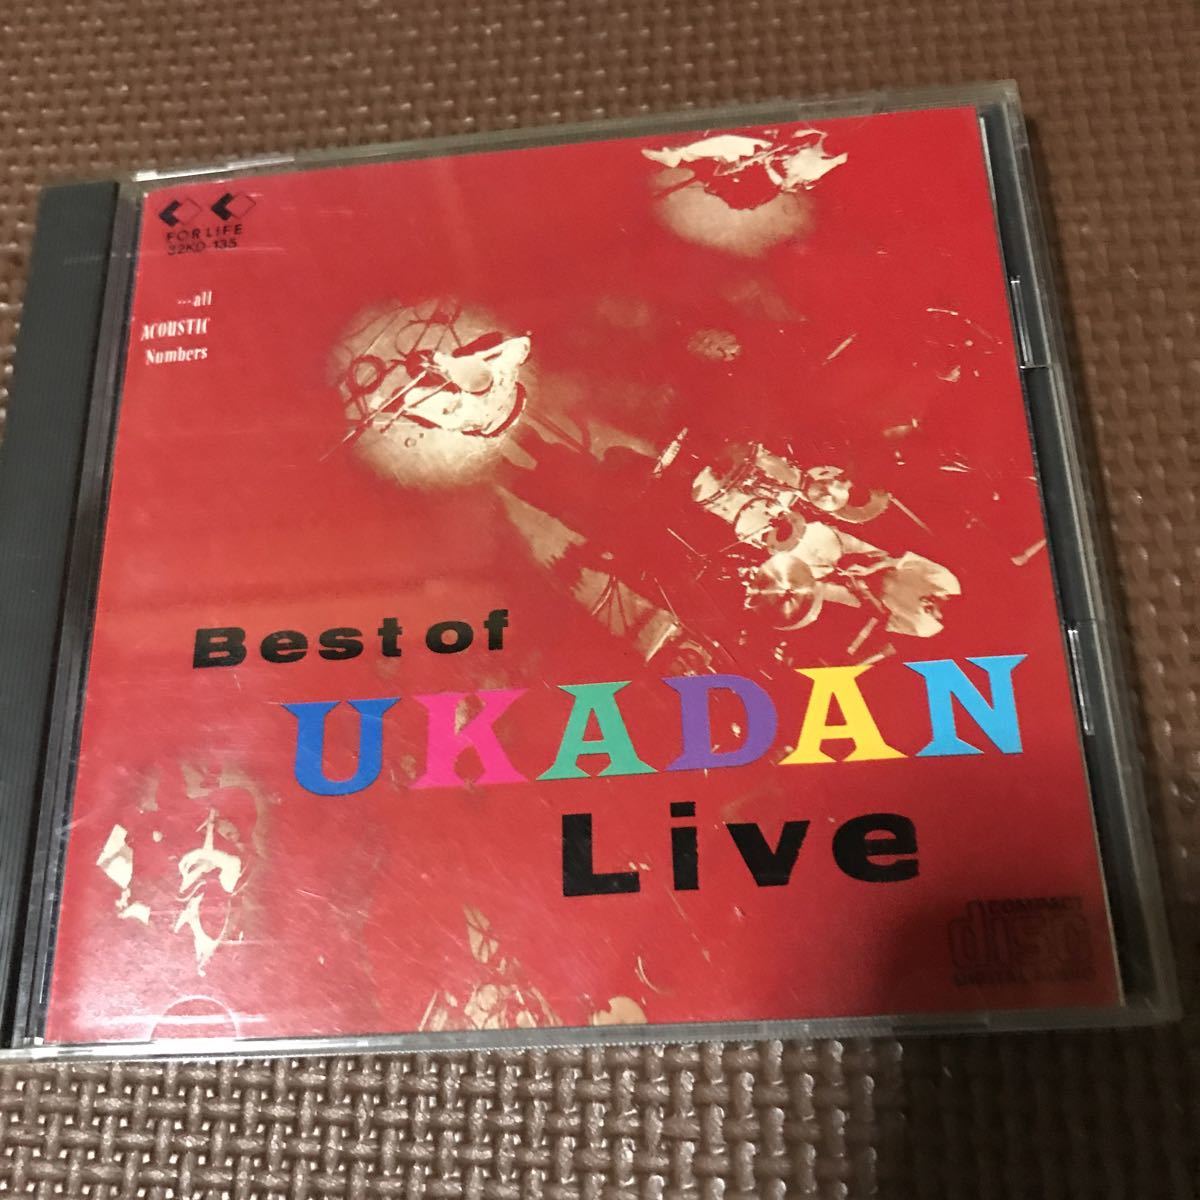 憂歌団 BEST OF UKADAN LIVE 32KD-135